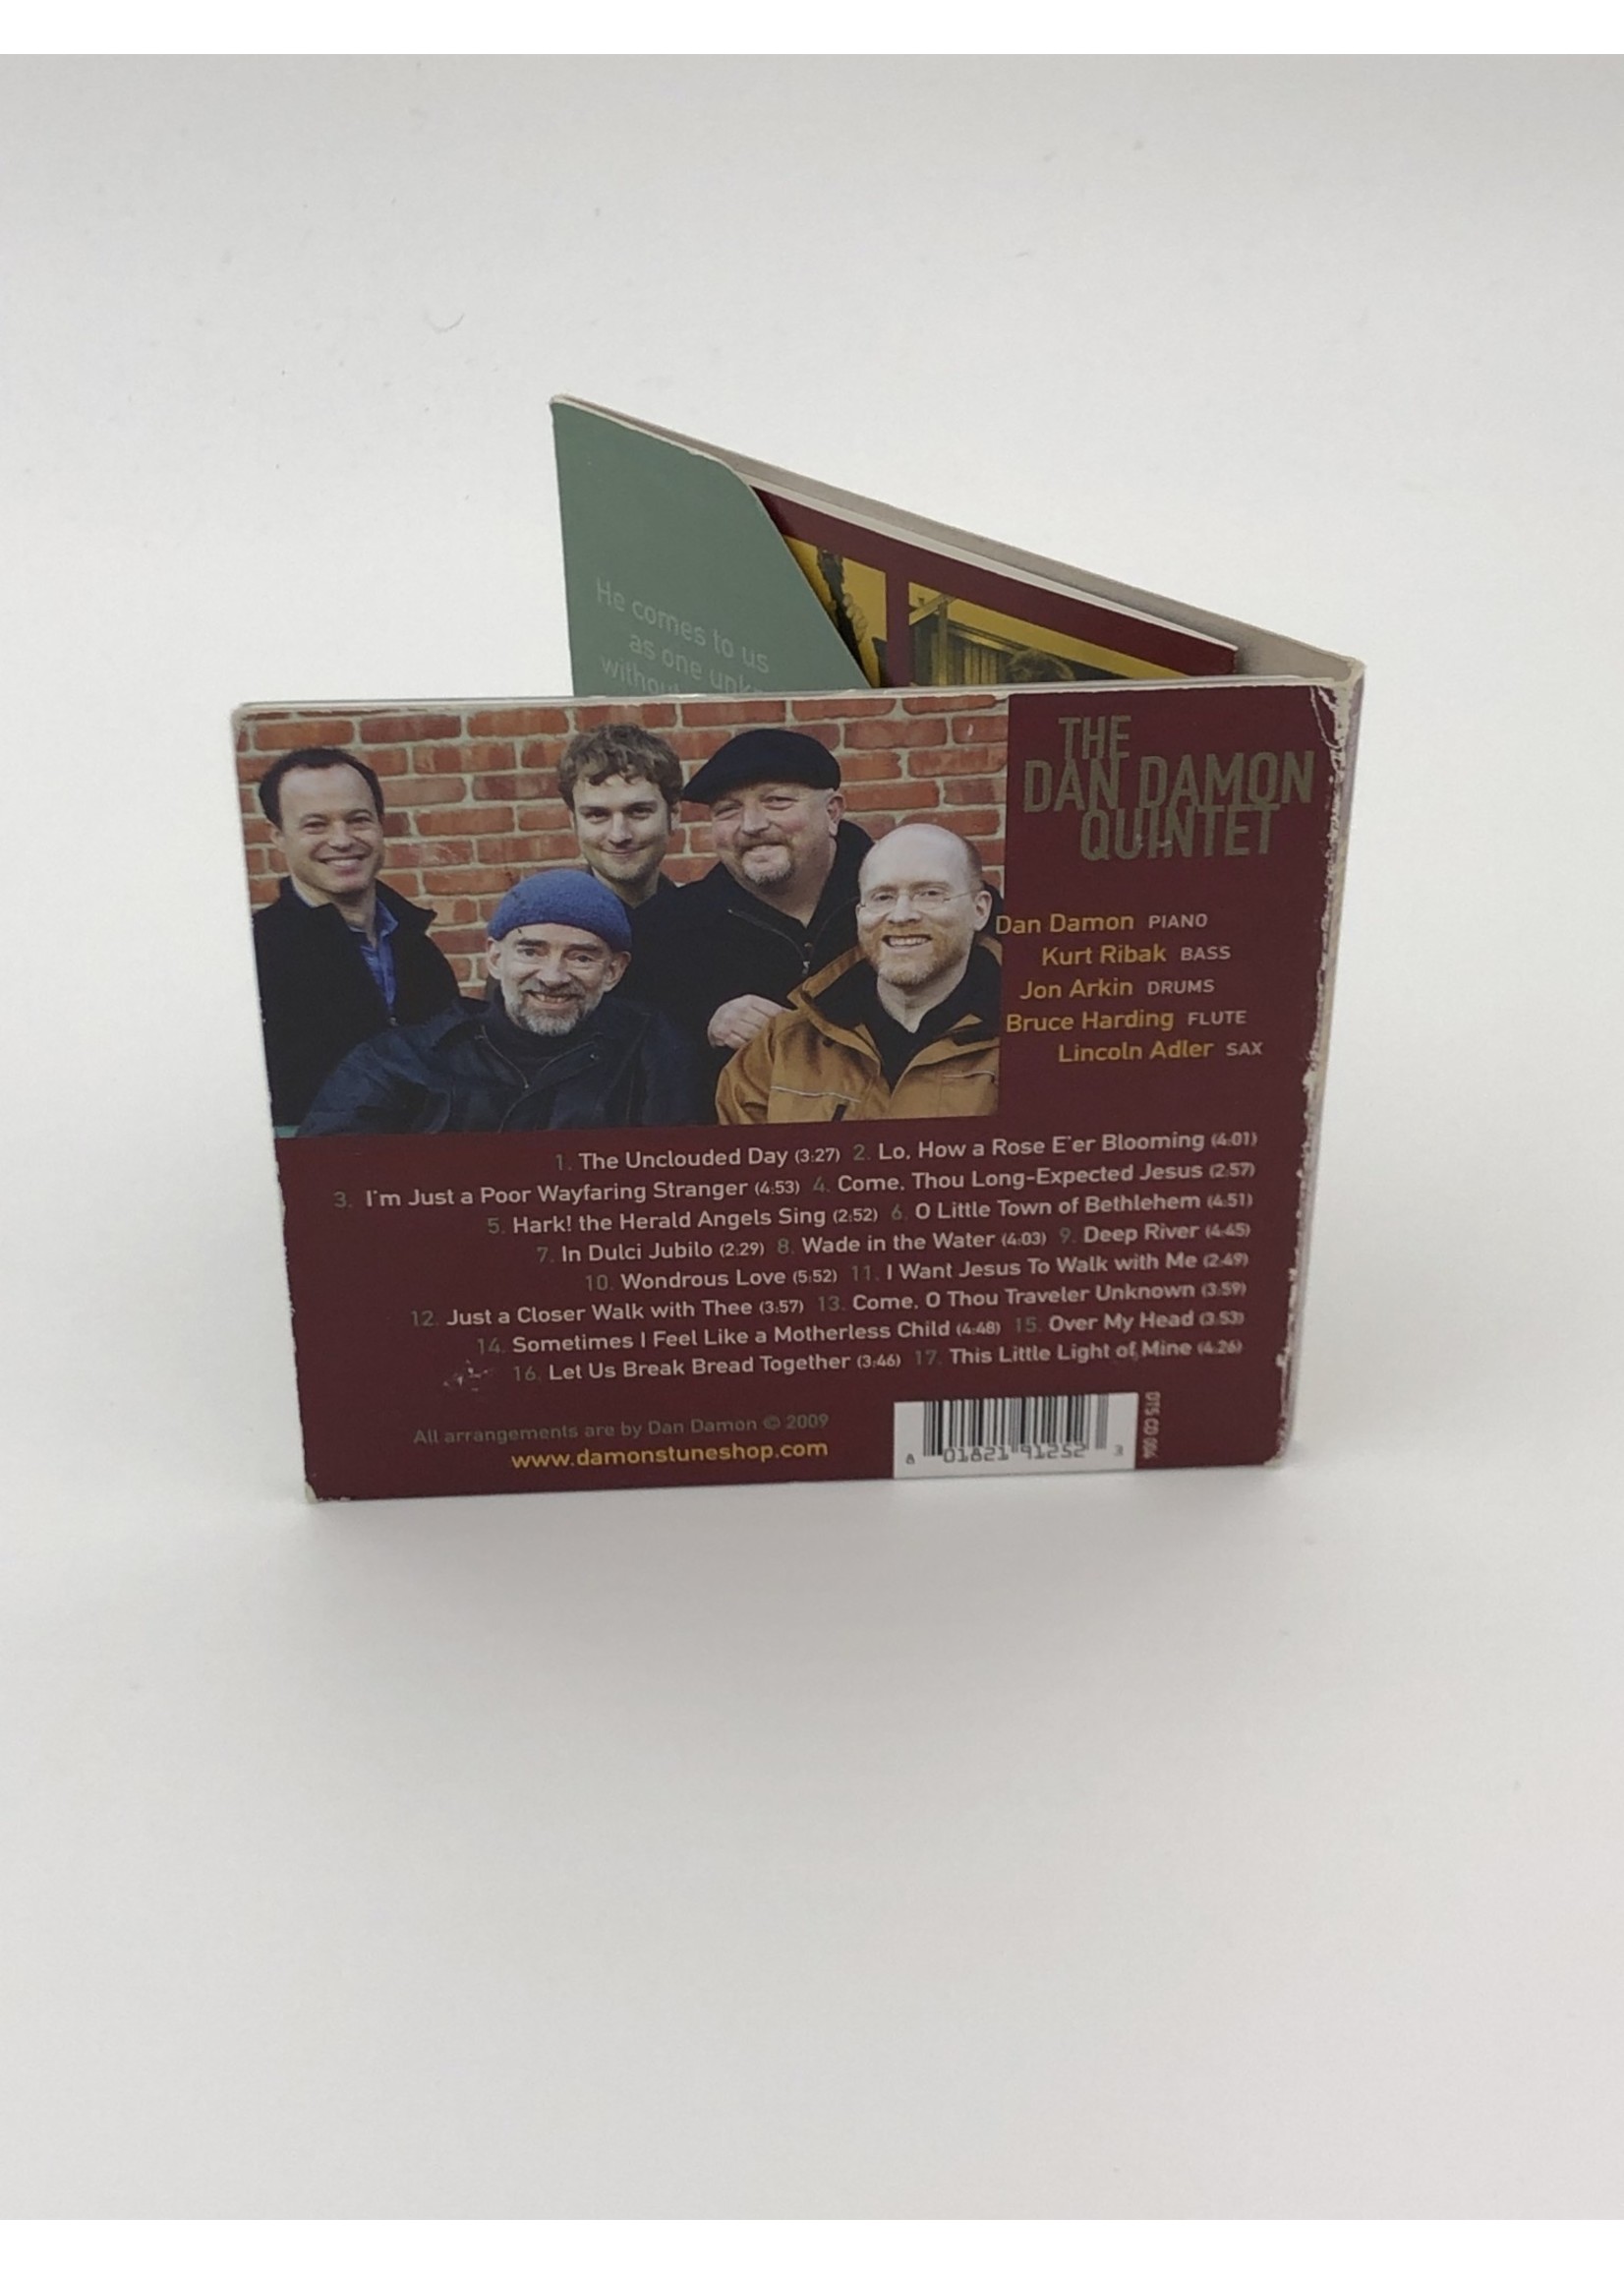 CD Traveler Unknown Concert: The Dan Damon Quintet CD